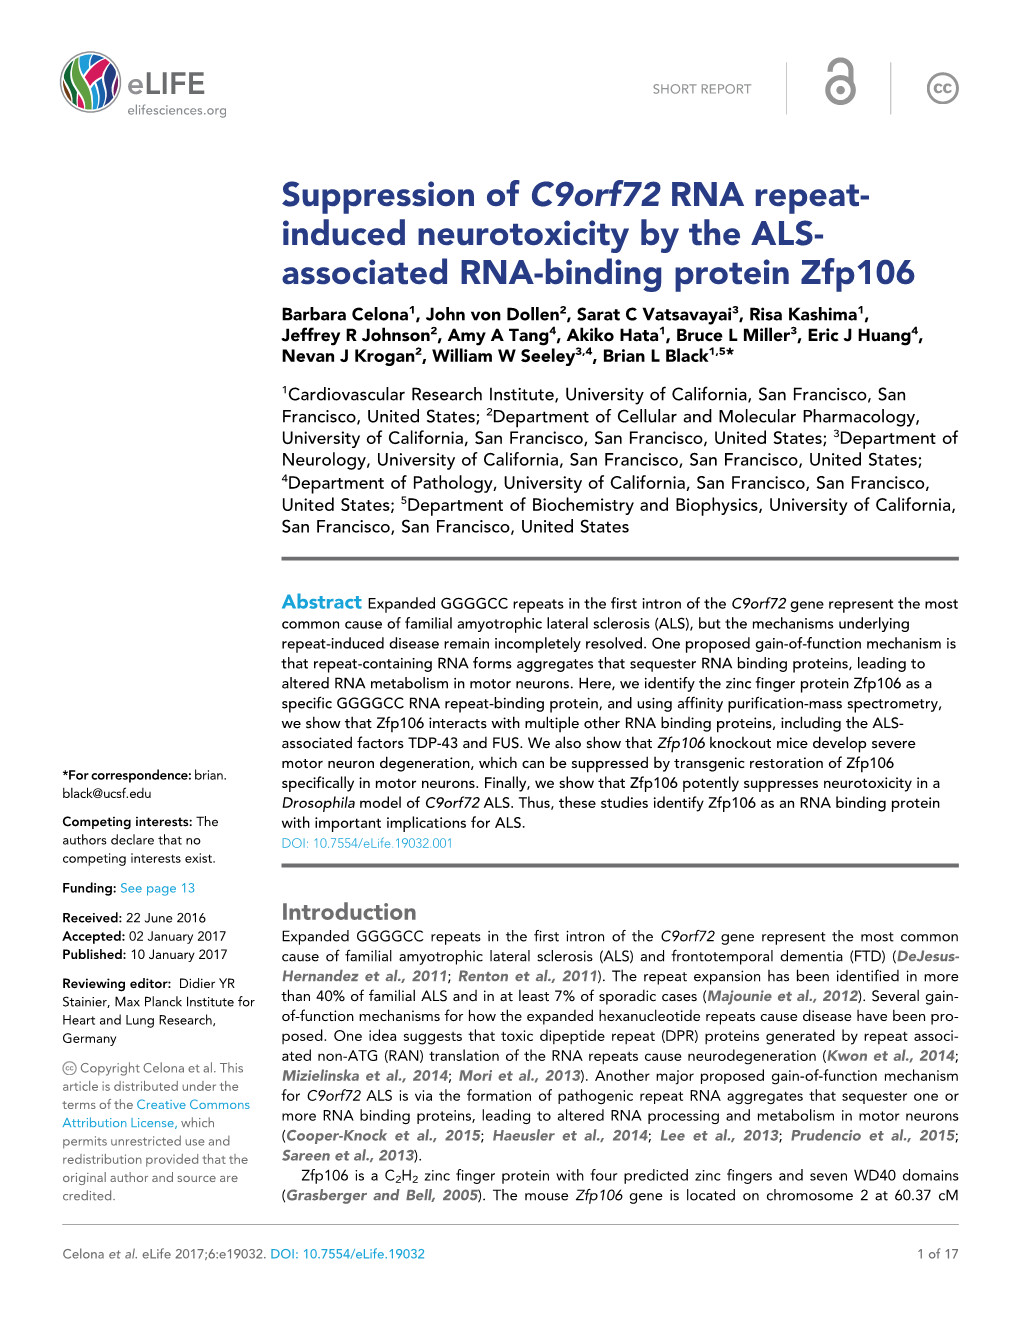 Associated RNA-Binding Protein Zfp106